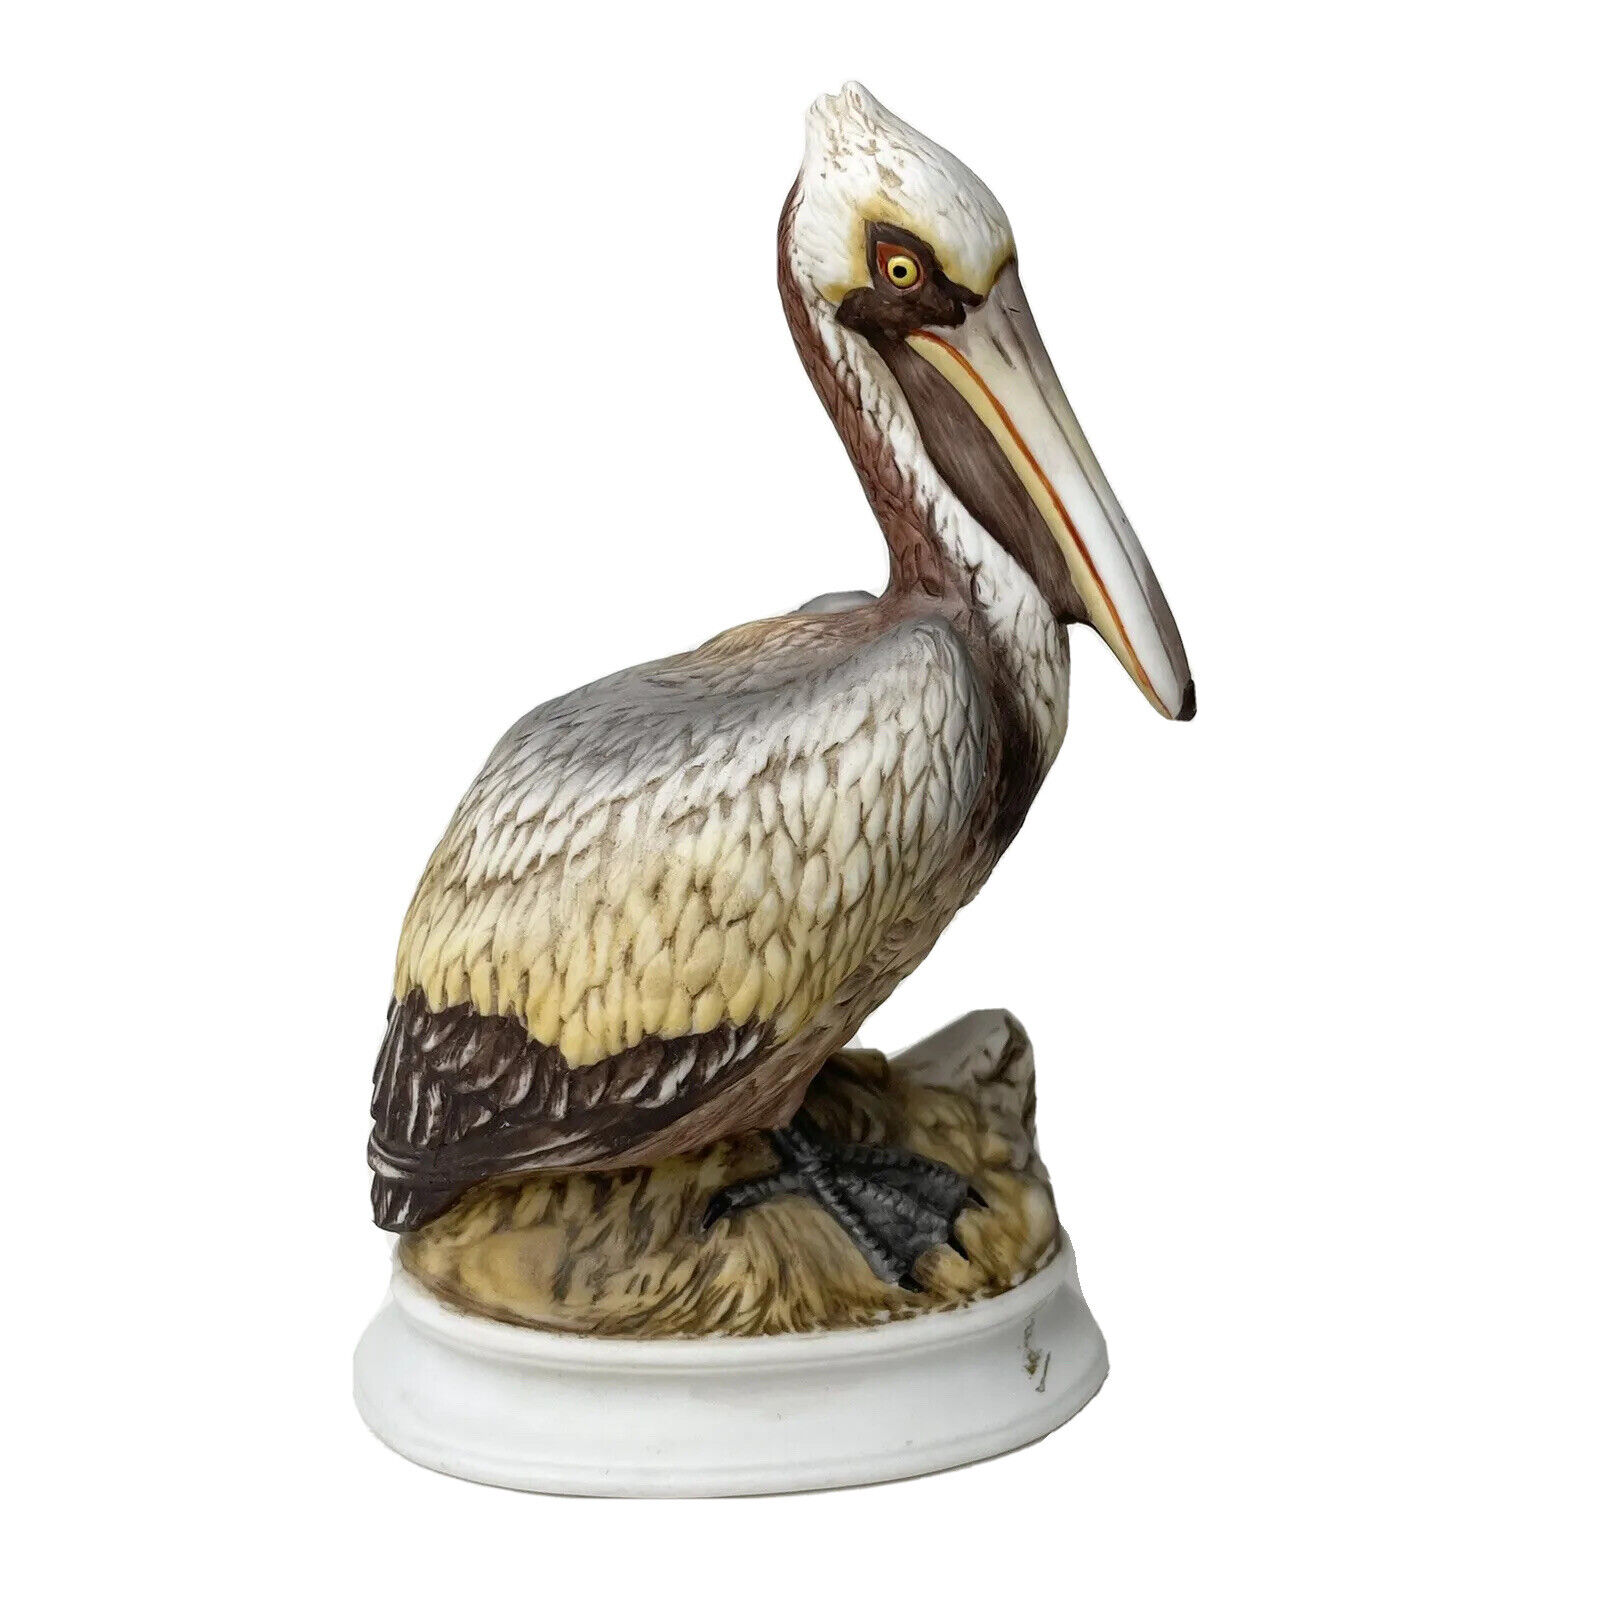 Vintage Ceramic Pelican By Creativa Ceramica Hernando Castelnuovo Design #1210